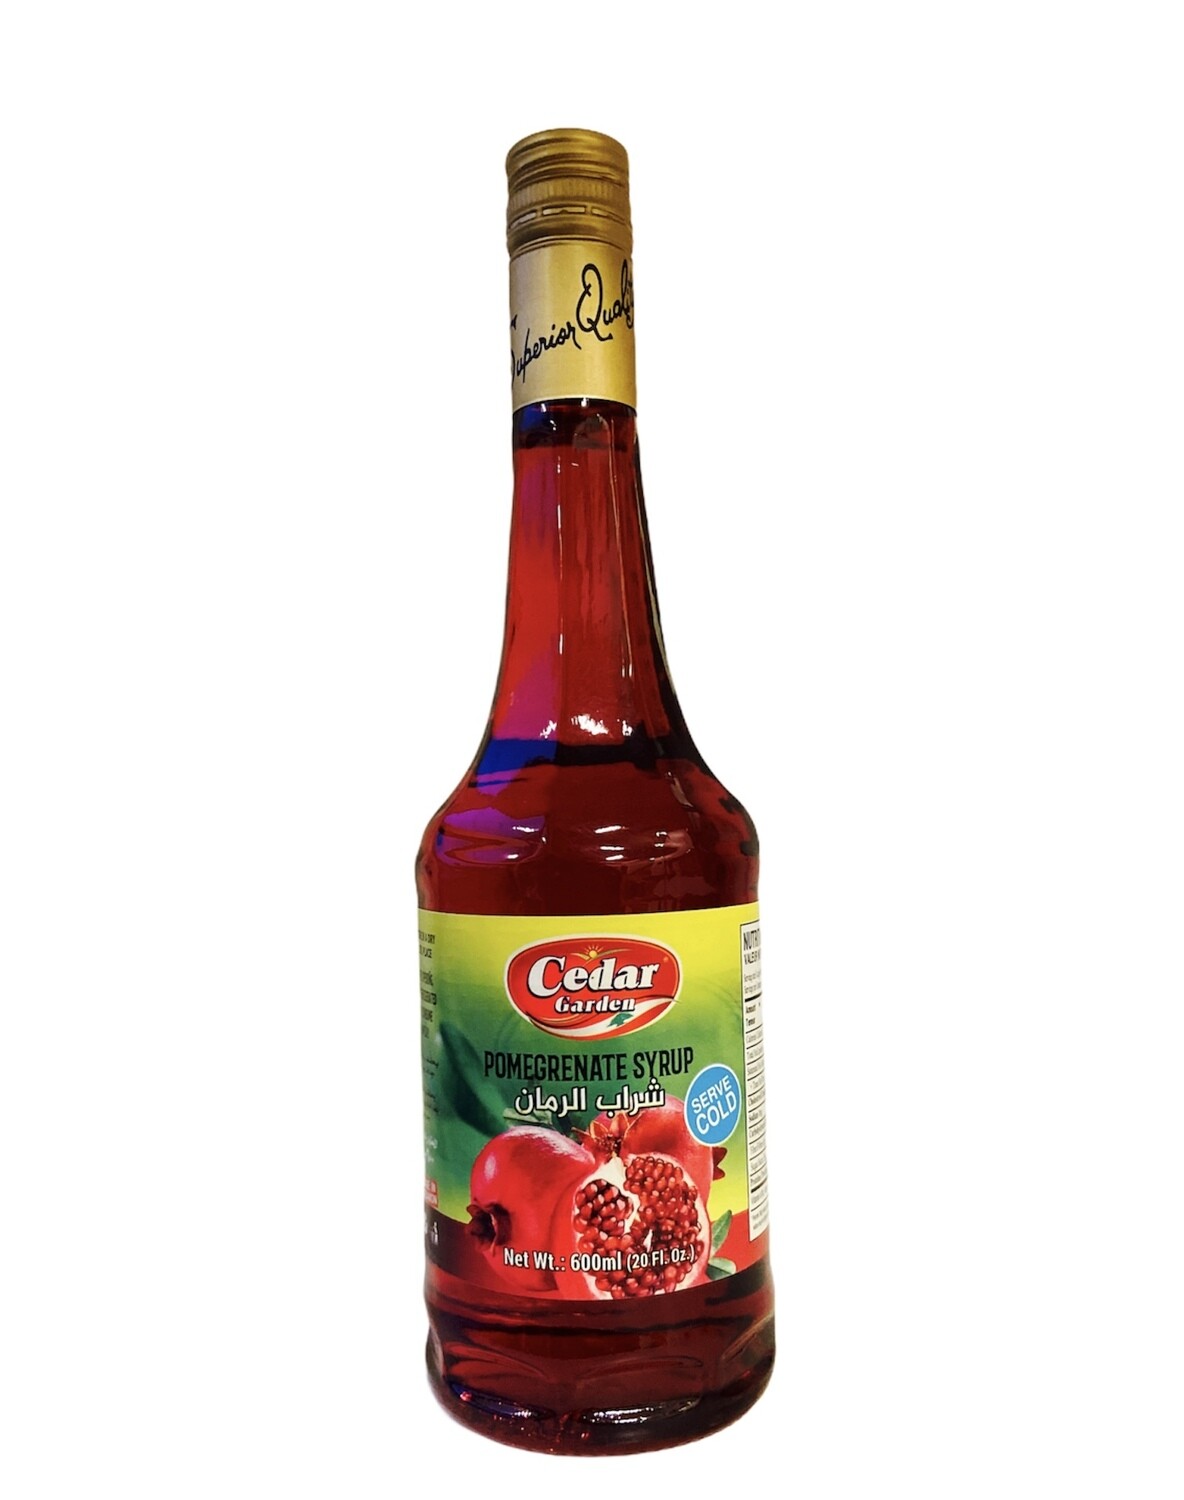 Cedar Garden Pomegranate Syrup 12x600ml